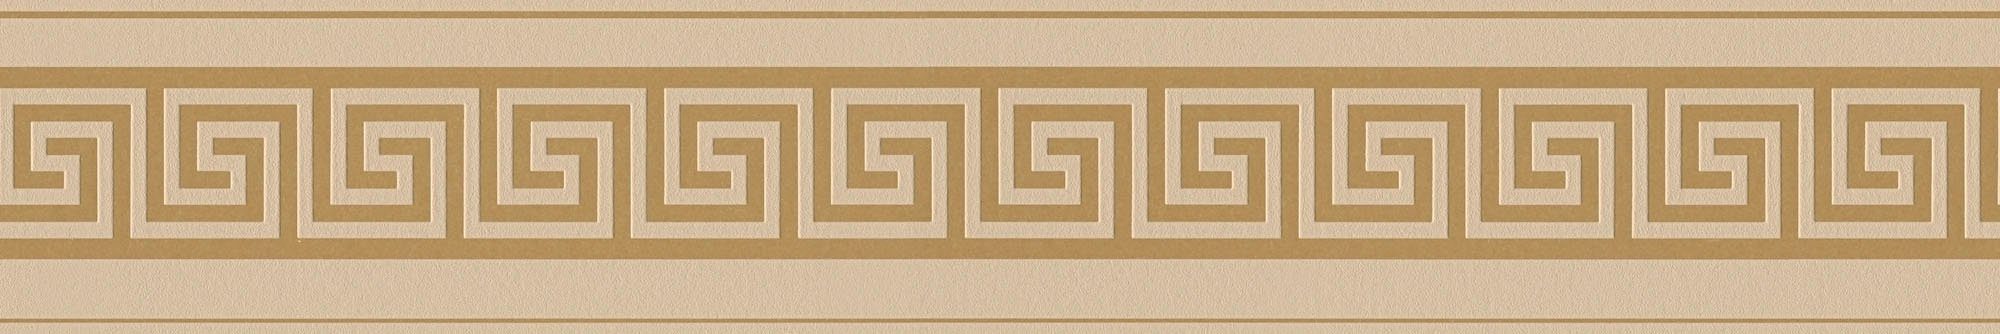 Bordüre Bordüre A.S. Geometrische Création grafisch, Metallic Borders Tapete strukturiert, geometrisch, 11, Bordüre Only Motiv, gold/goldfarben